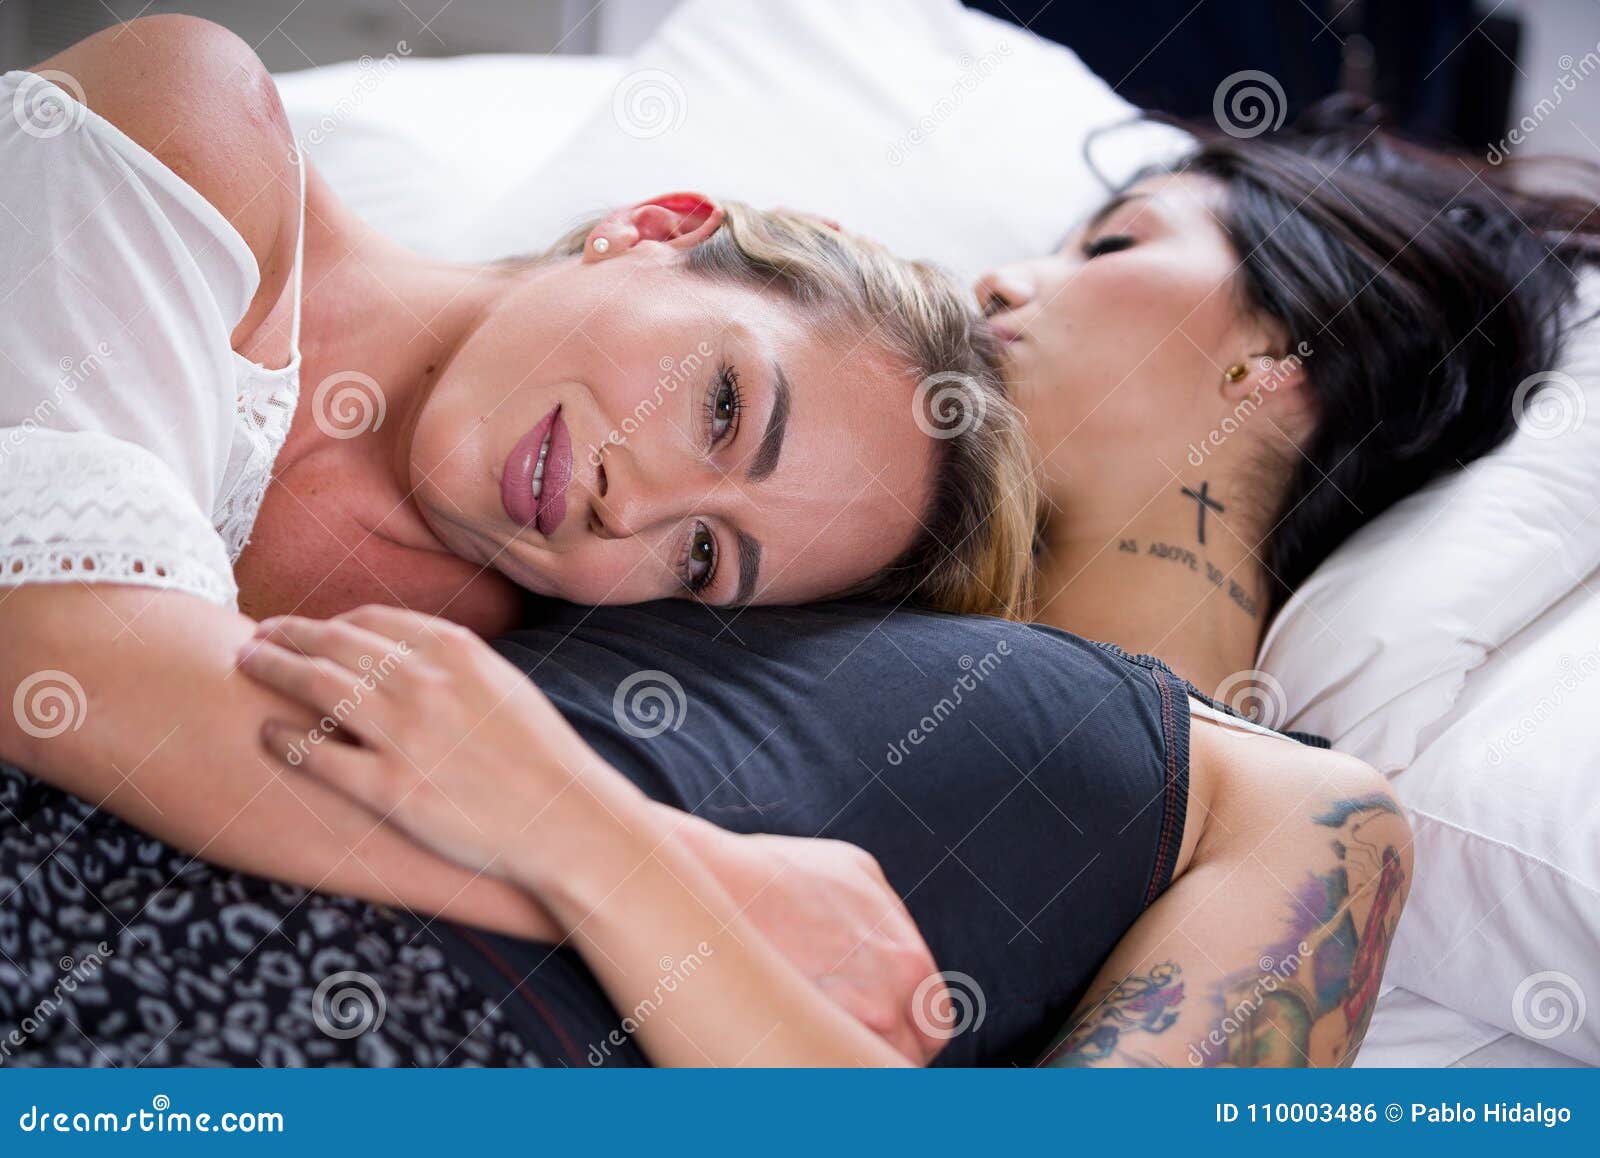 my girlfriend sleep lesbian